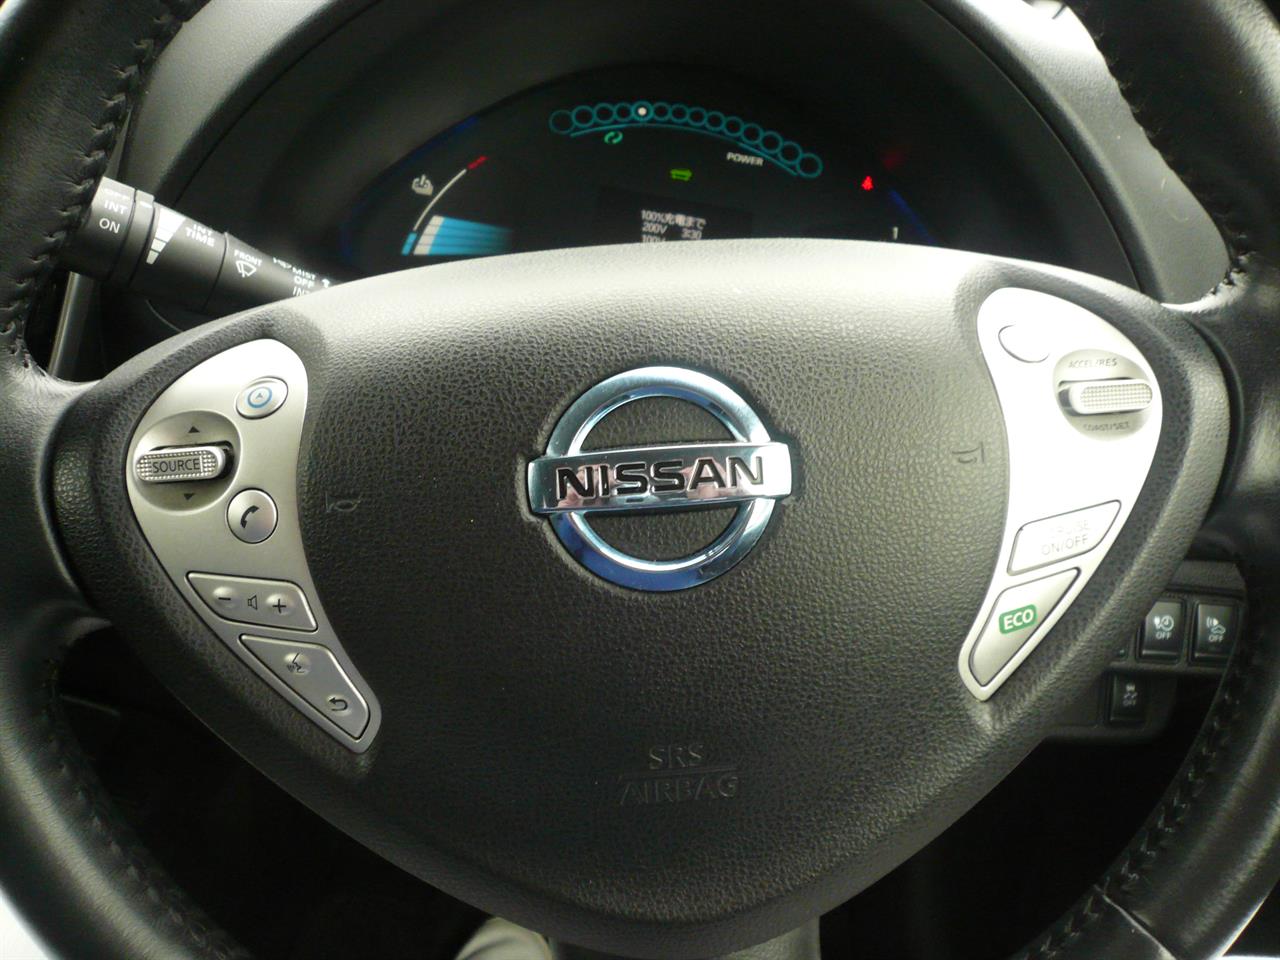 2015 Nissan Leaf 24kwh Gen 2